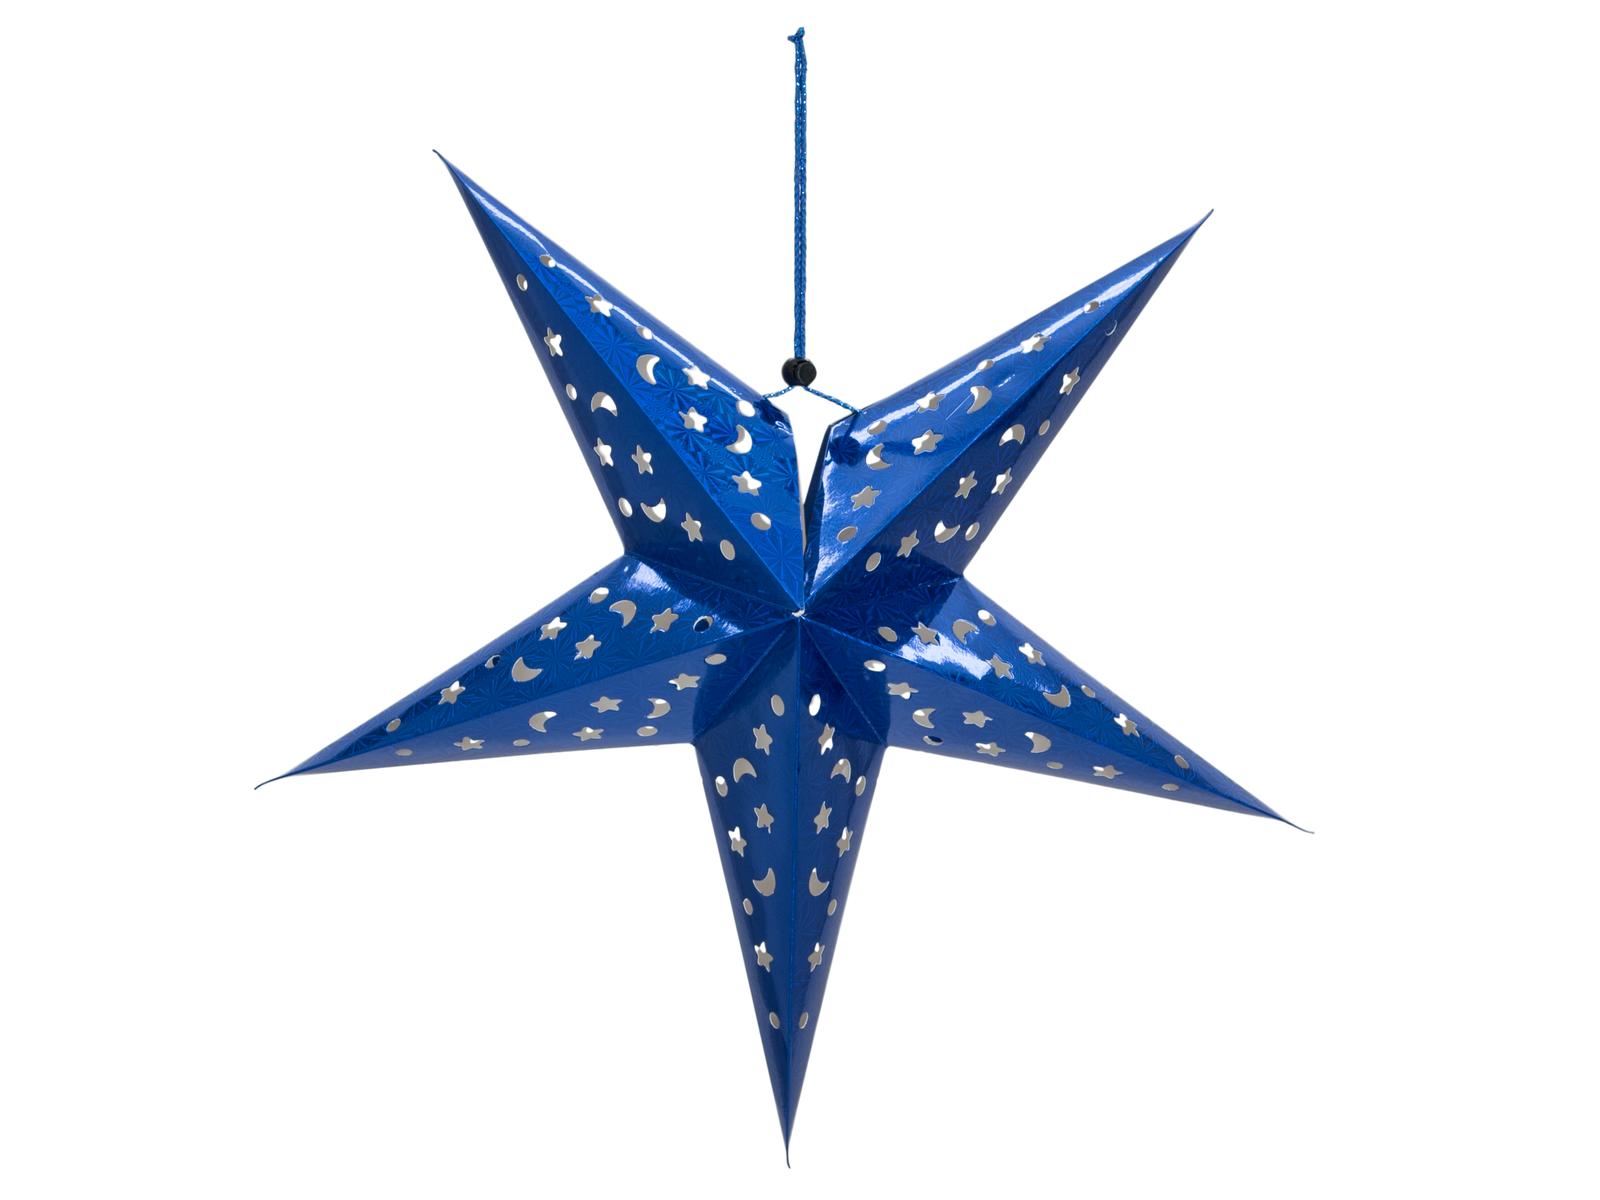 EUROPALMS Stern Laterne, Papier blau, 75 cm